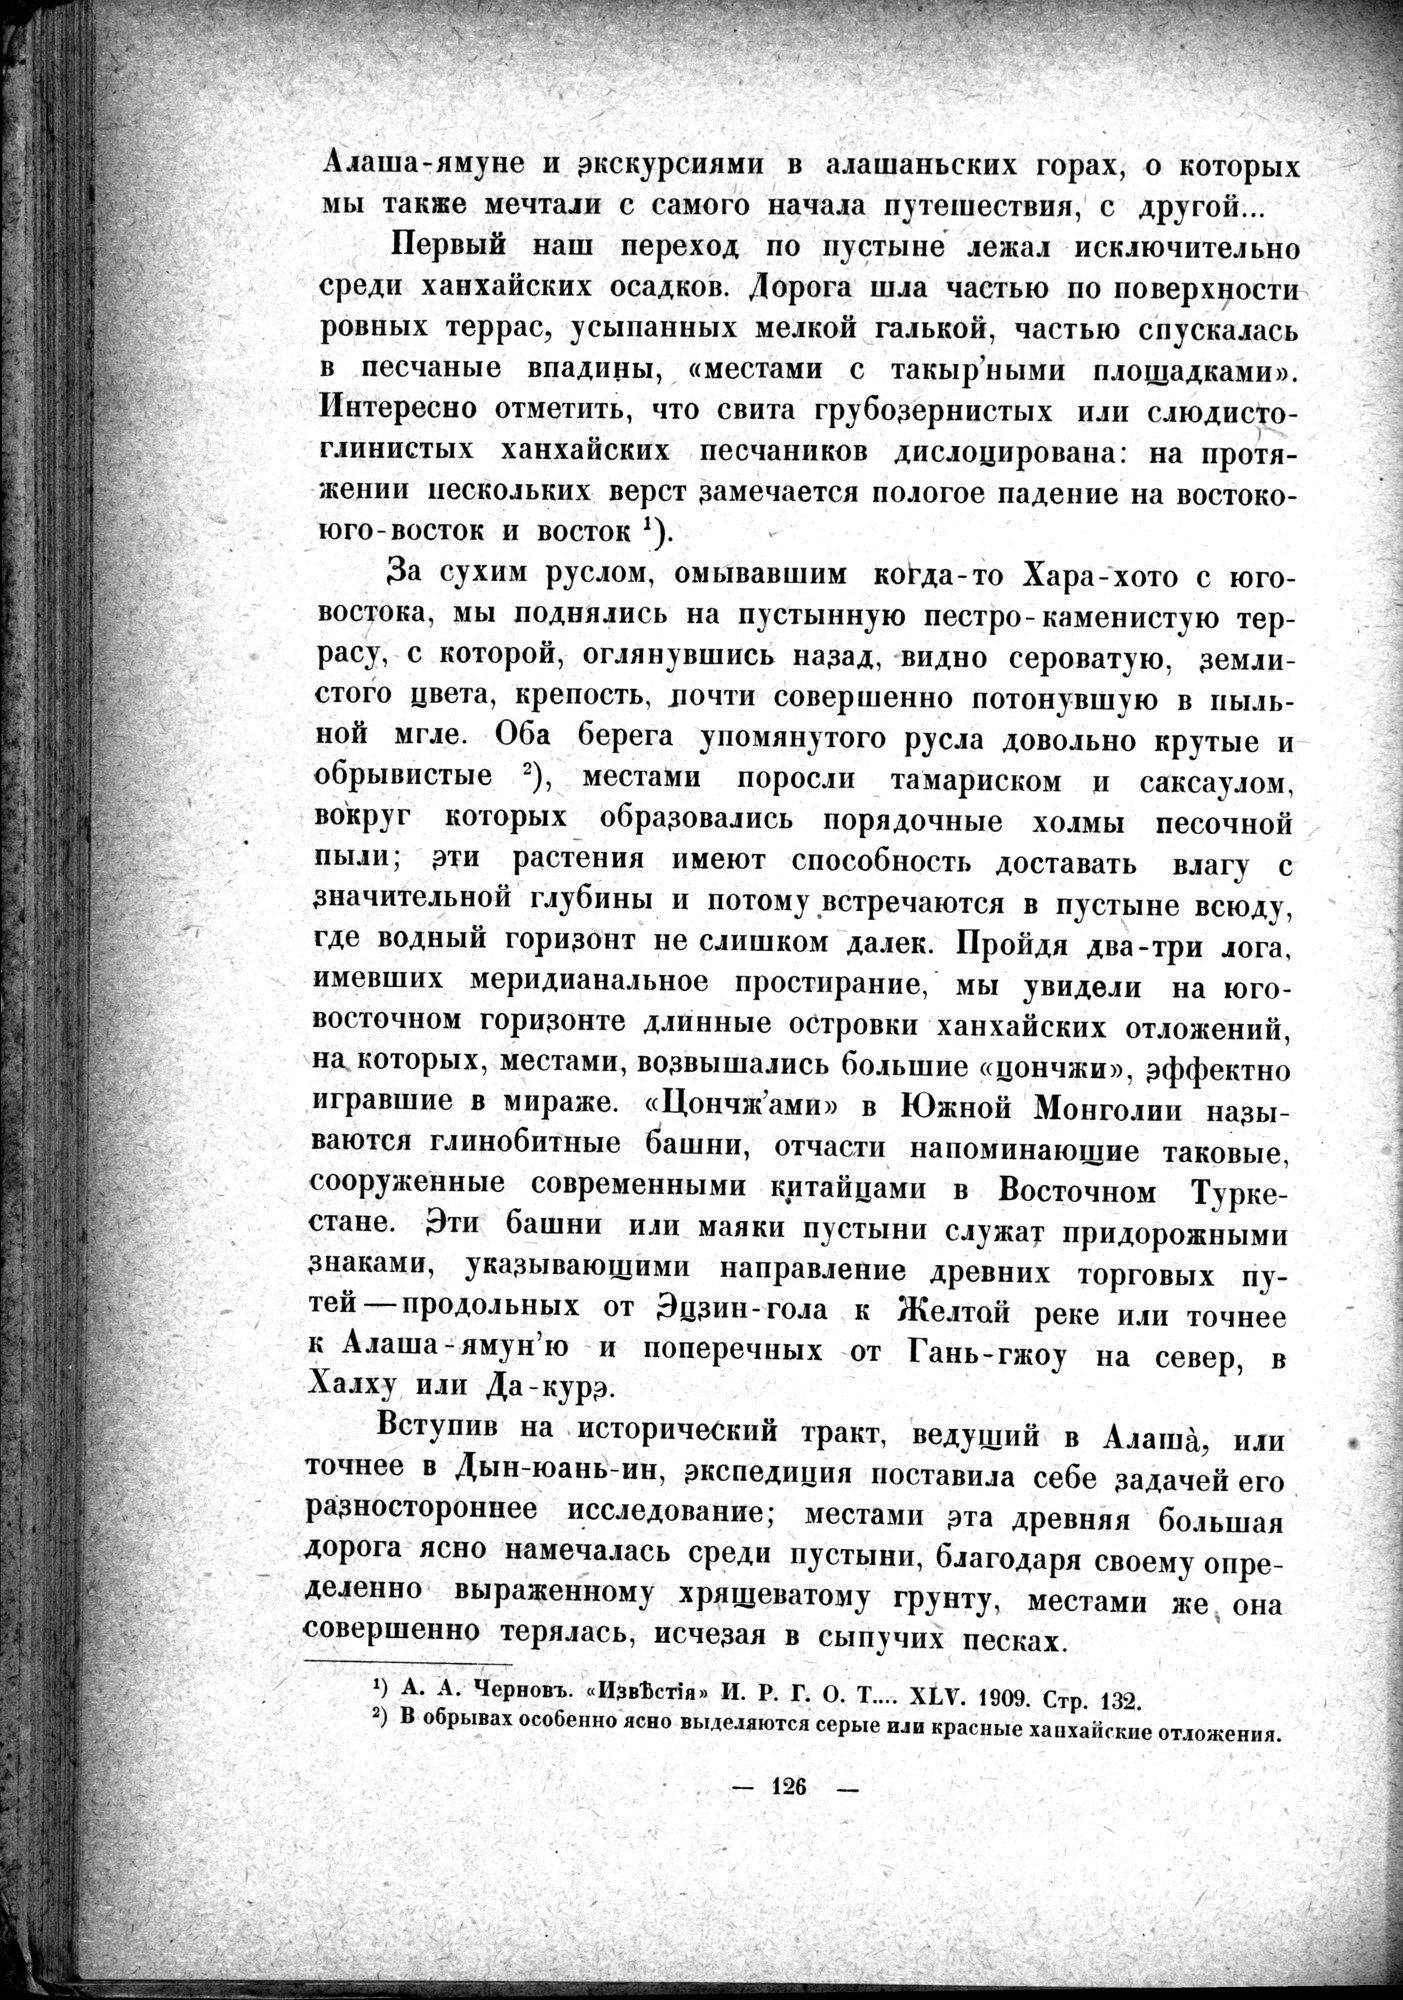 Mongoliya i Amdo i mertby gorod Khara-Khoto : vol.1 / Page 152 (Grayscale High Resolution Image)